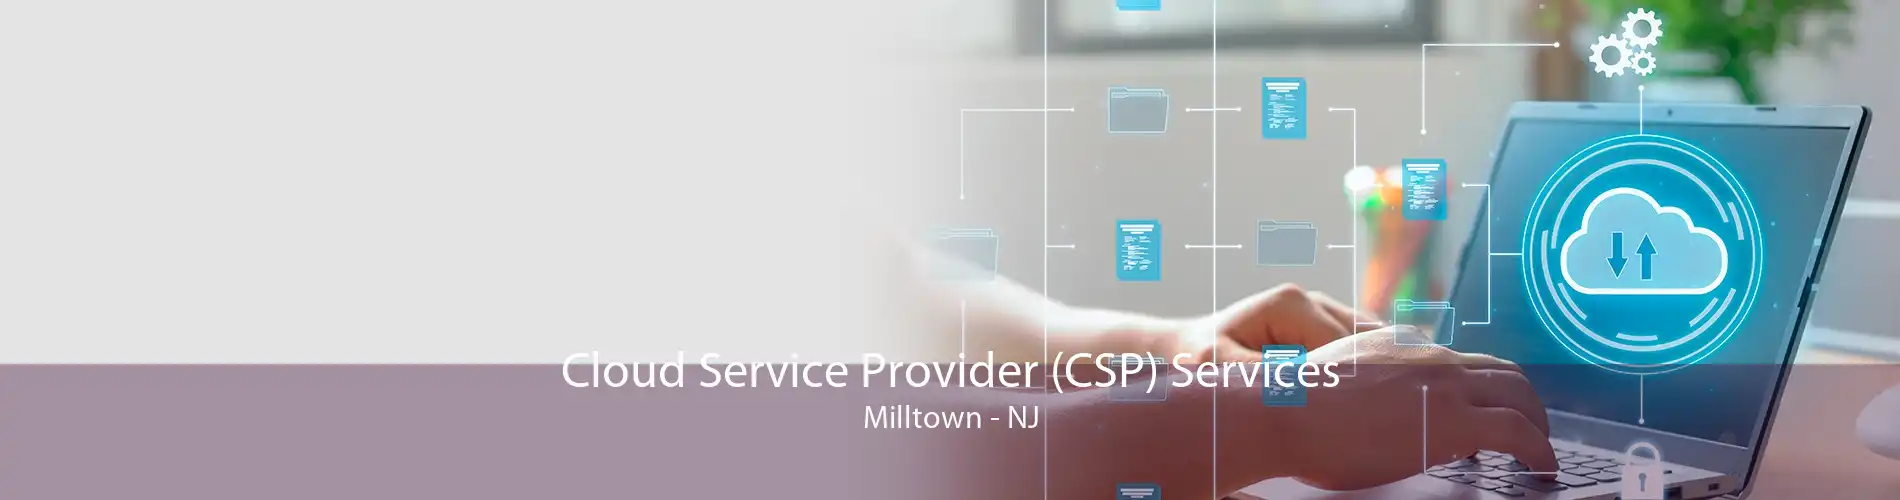 Cloud Service Provider (CSP) Services Milltown - NJ